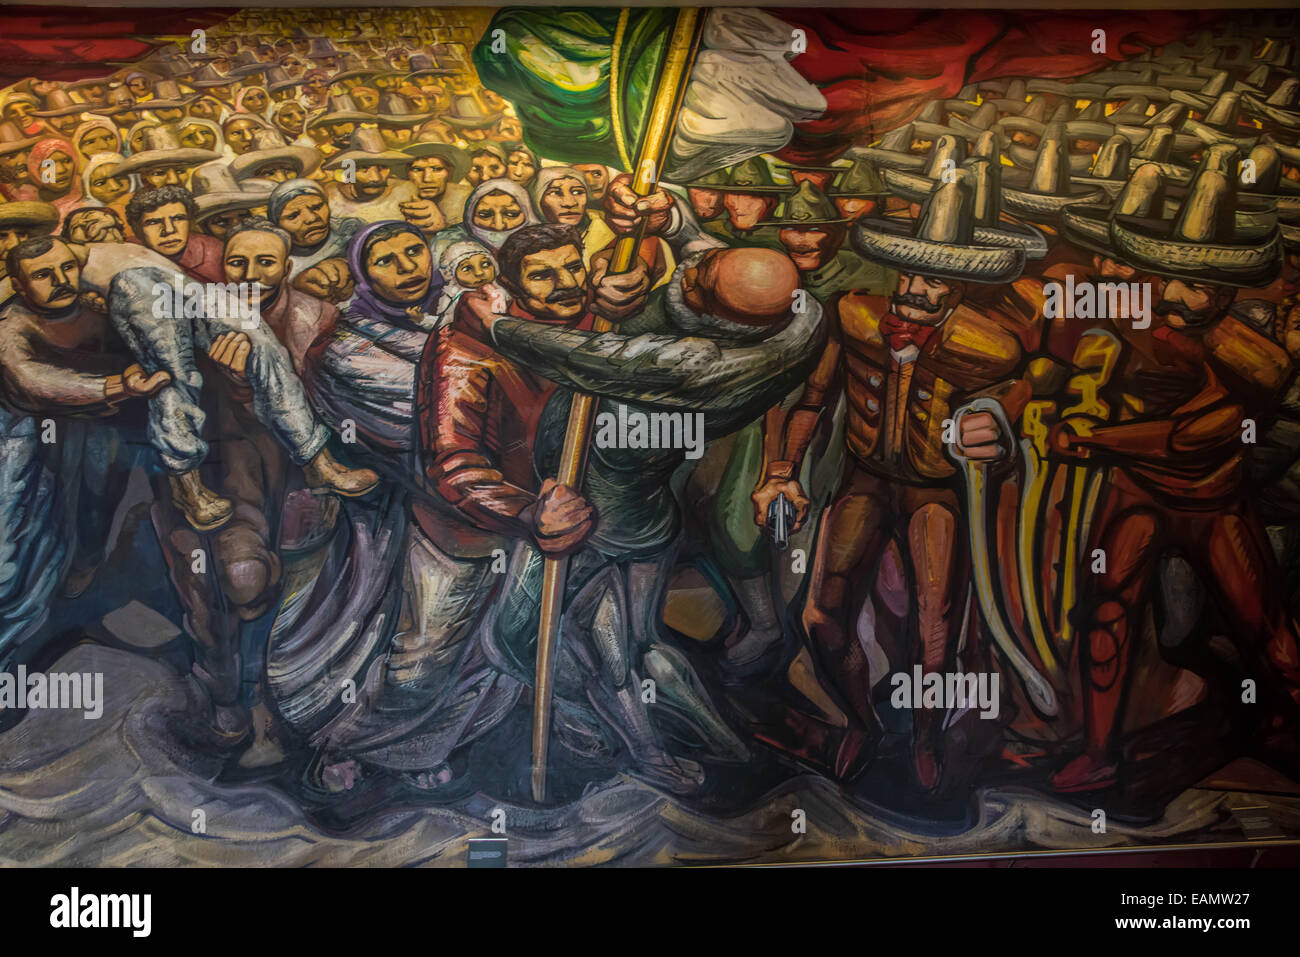 Giant mural by Mexican artist David Alfaro Siqueiros,Chapultepec castle,Mexico city,Mexico Stock Photo